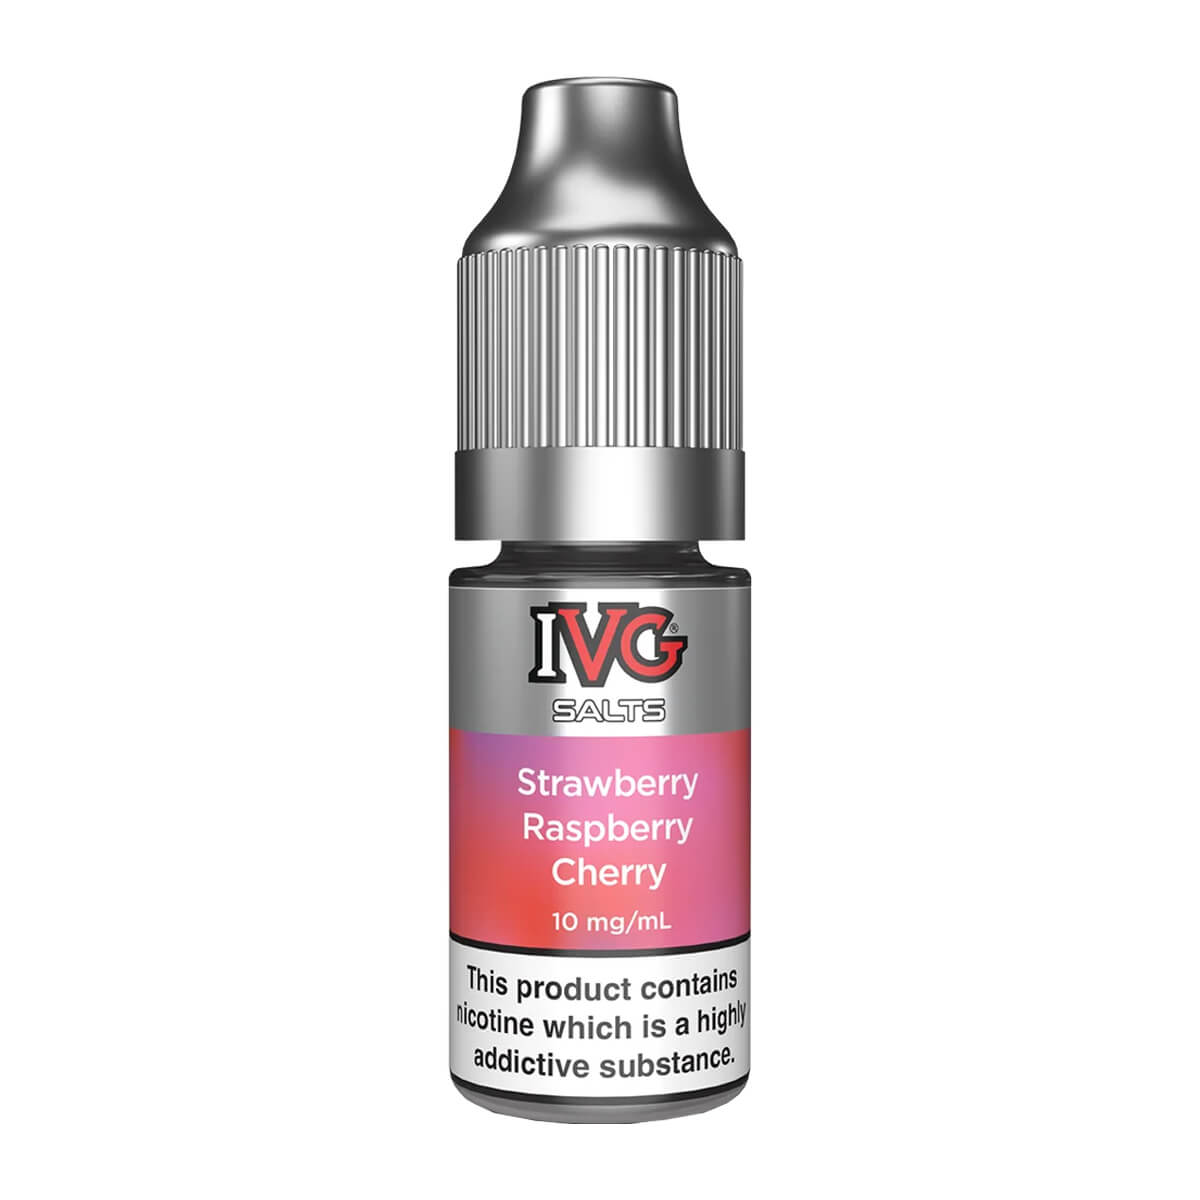 Strawberry Raspberry Cherry Nic Salt E-Liquid by IVG